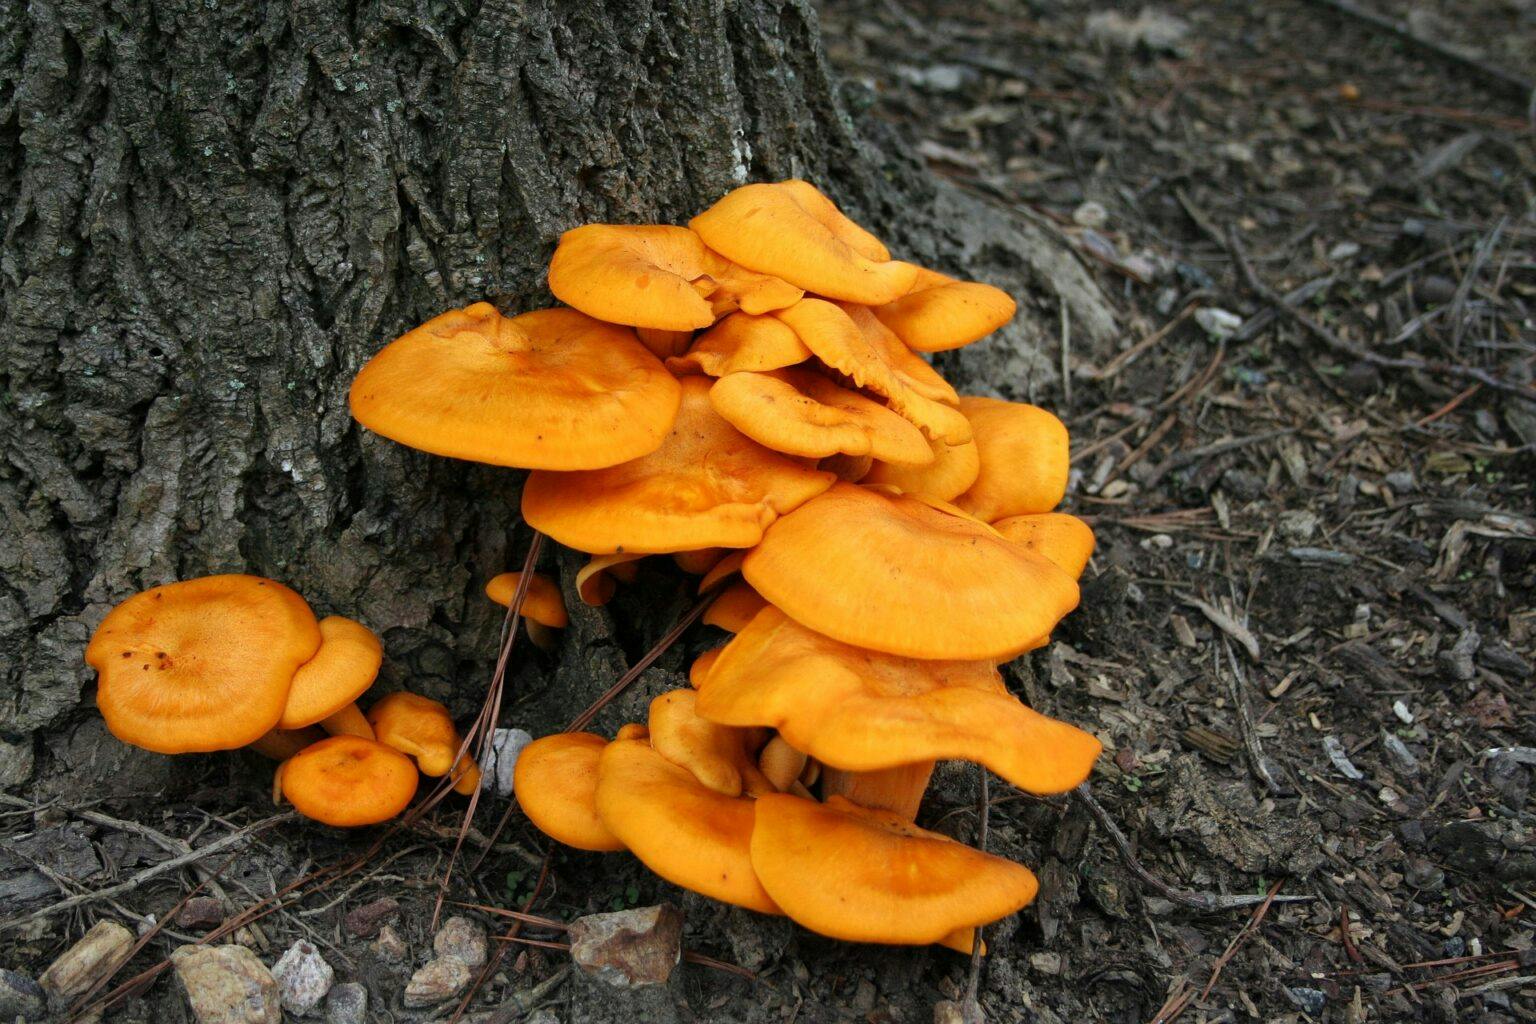  Innovative Ways on How to Prepare Golden Chanterelle Mushrooms